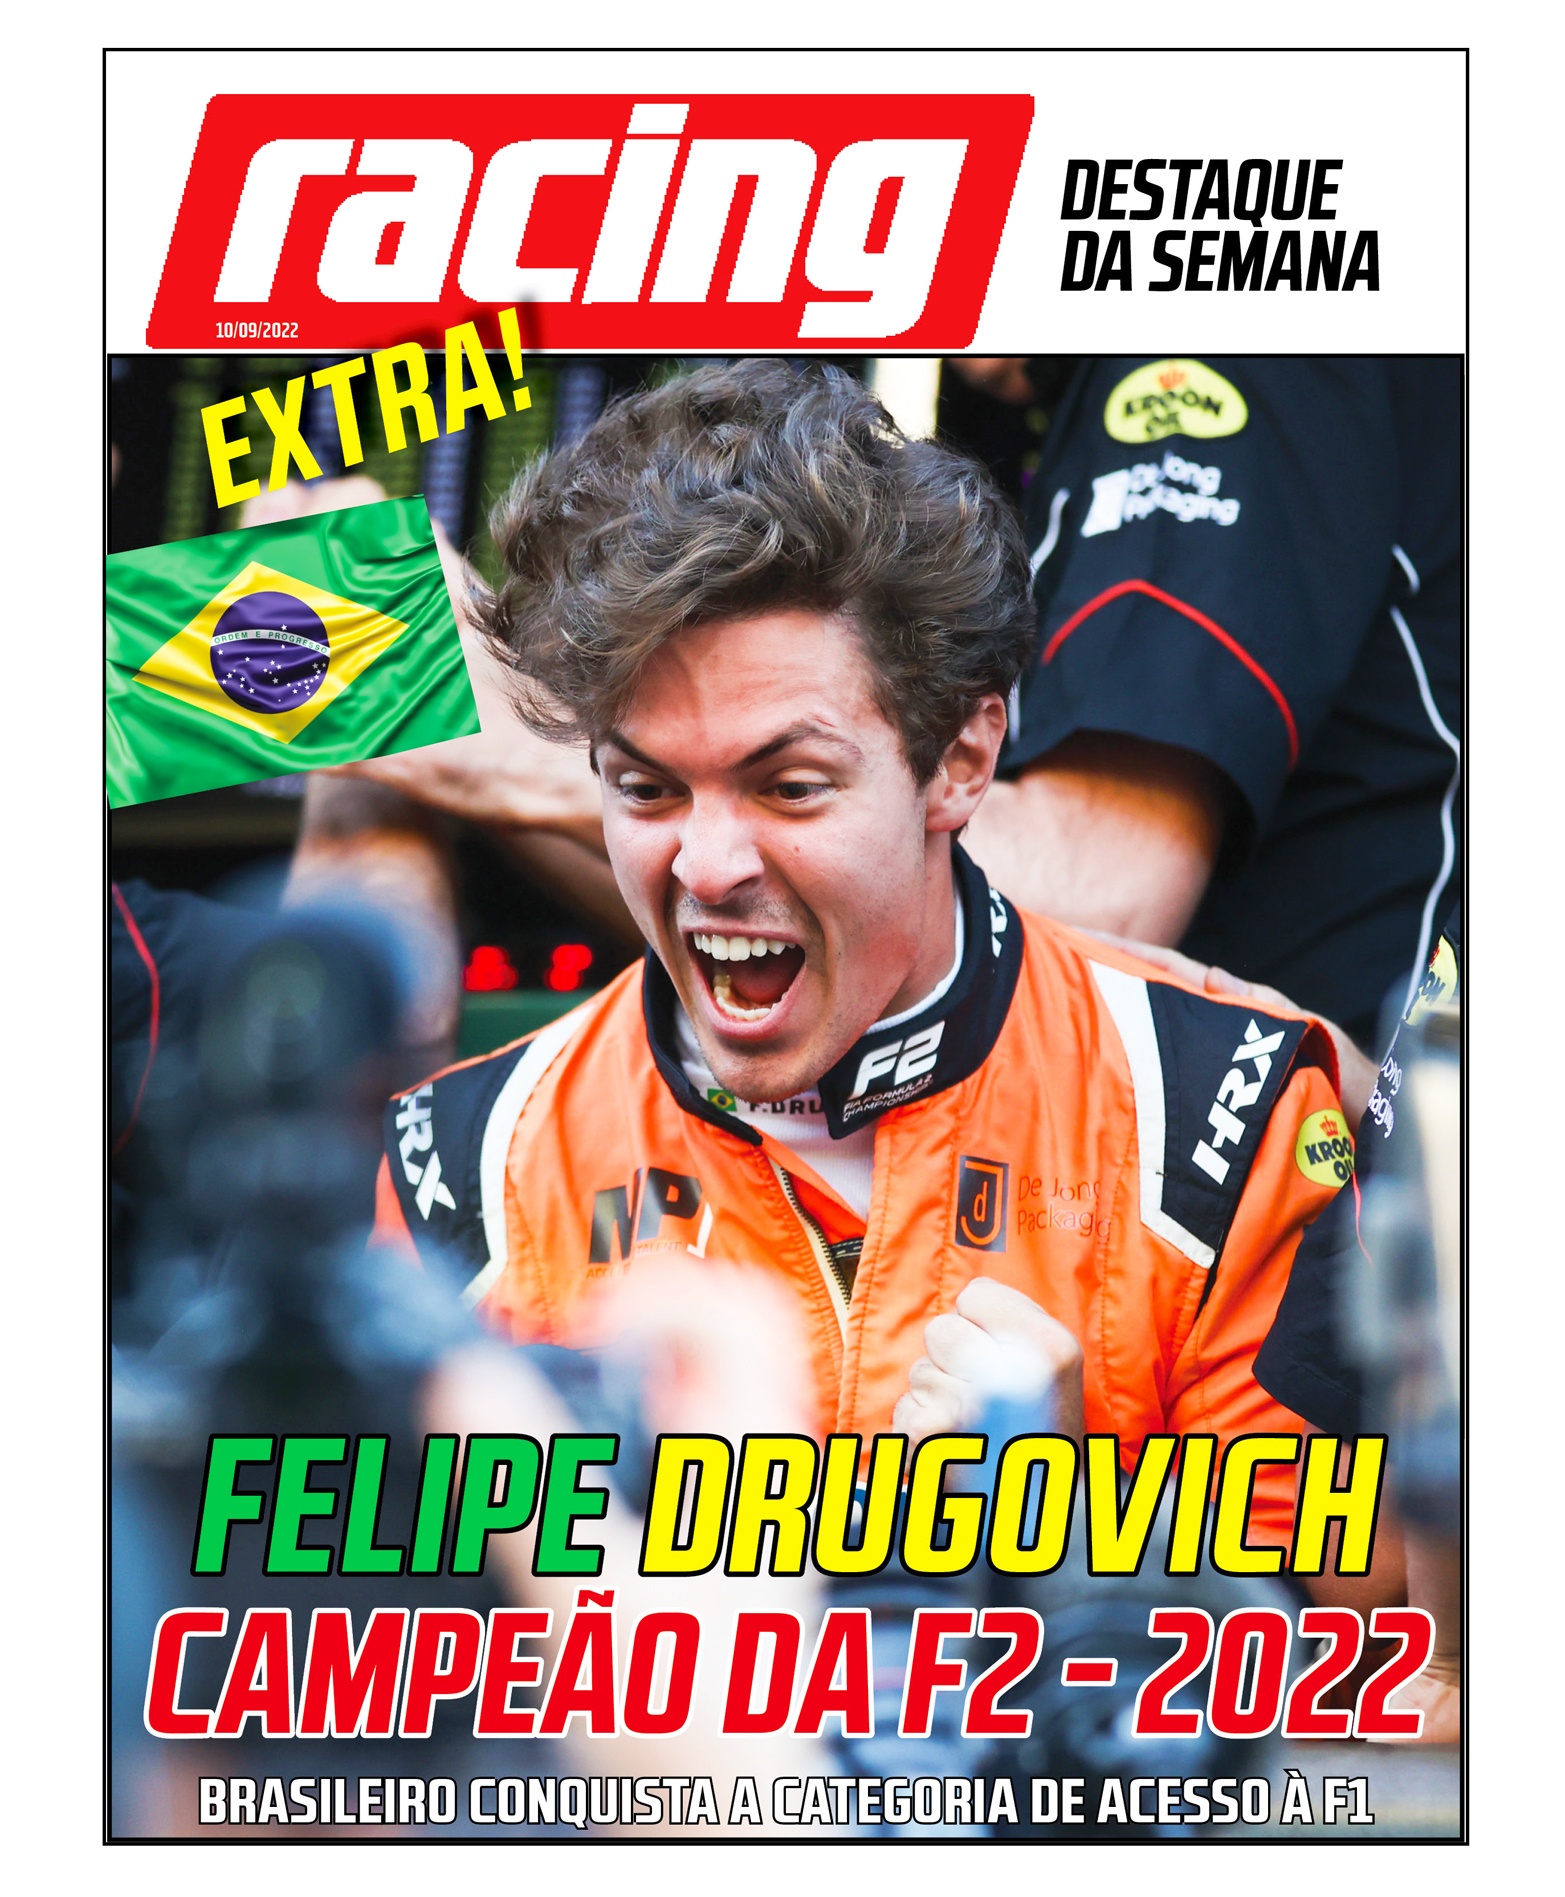 Felipe Drugovich Campeão F2 2022